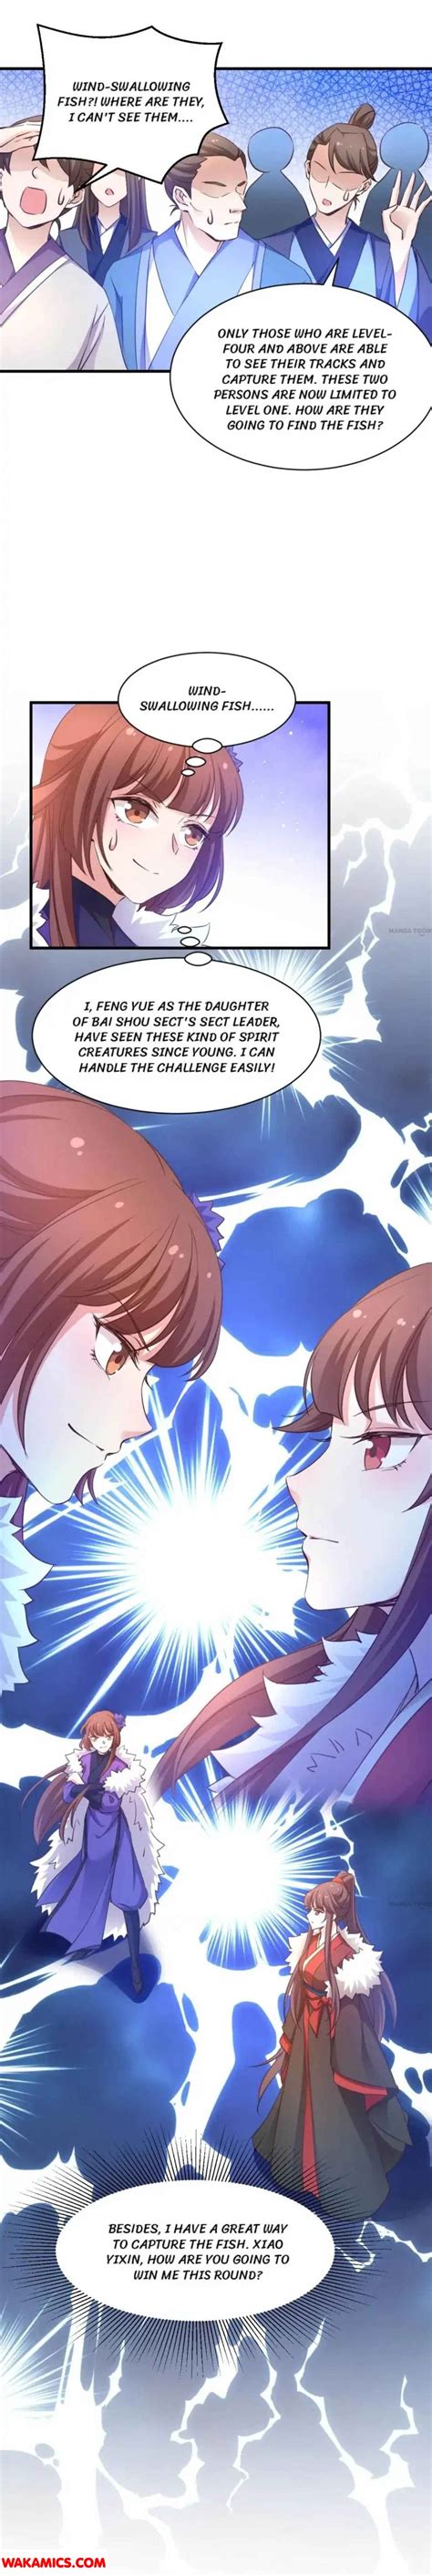 Read Villain Girls Punishment Game Manga English All